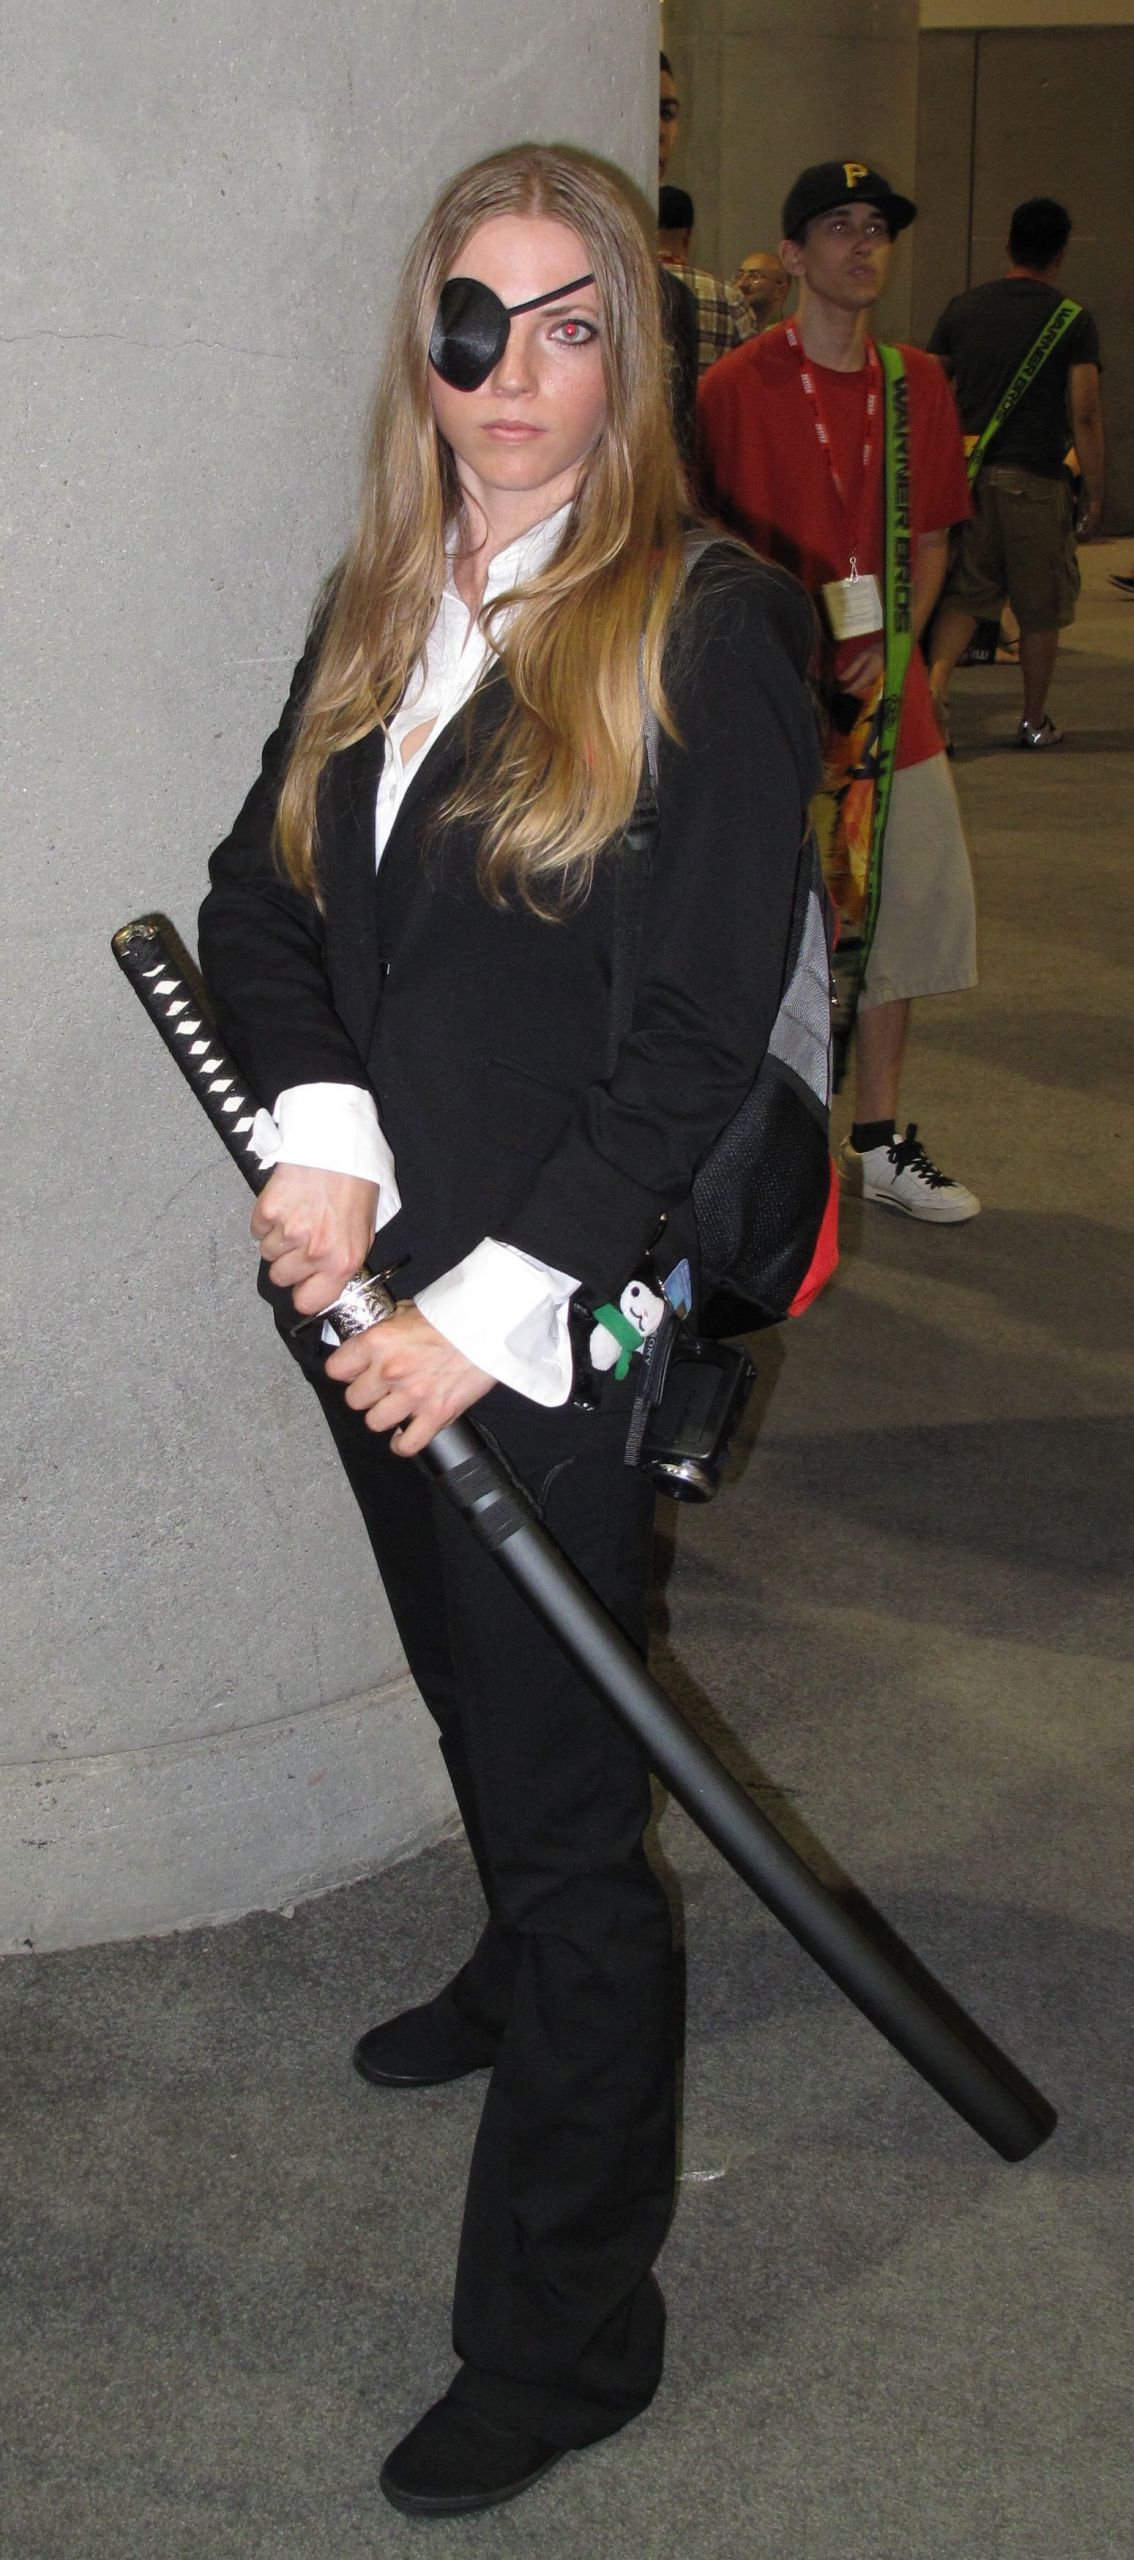 Kill Bill Costume DIY
 elle driver kill bill diy costume Google Search